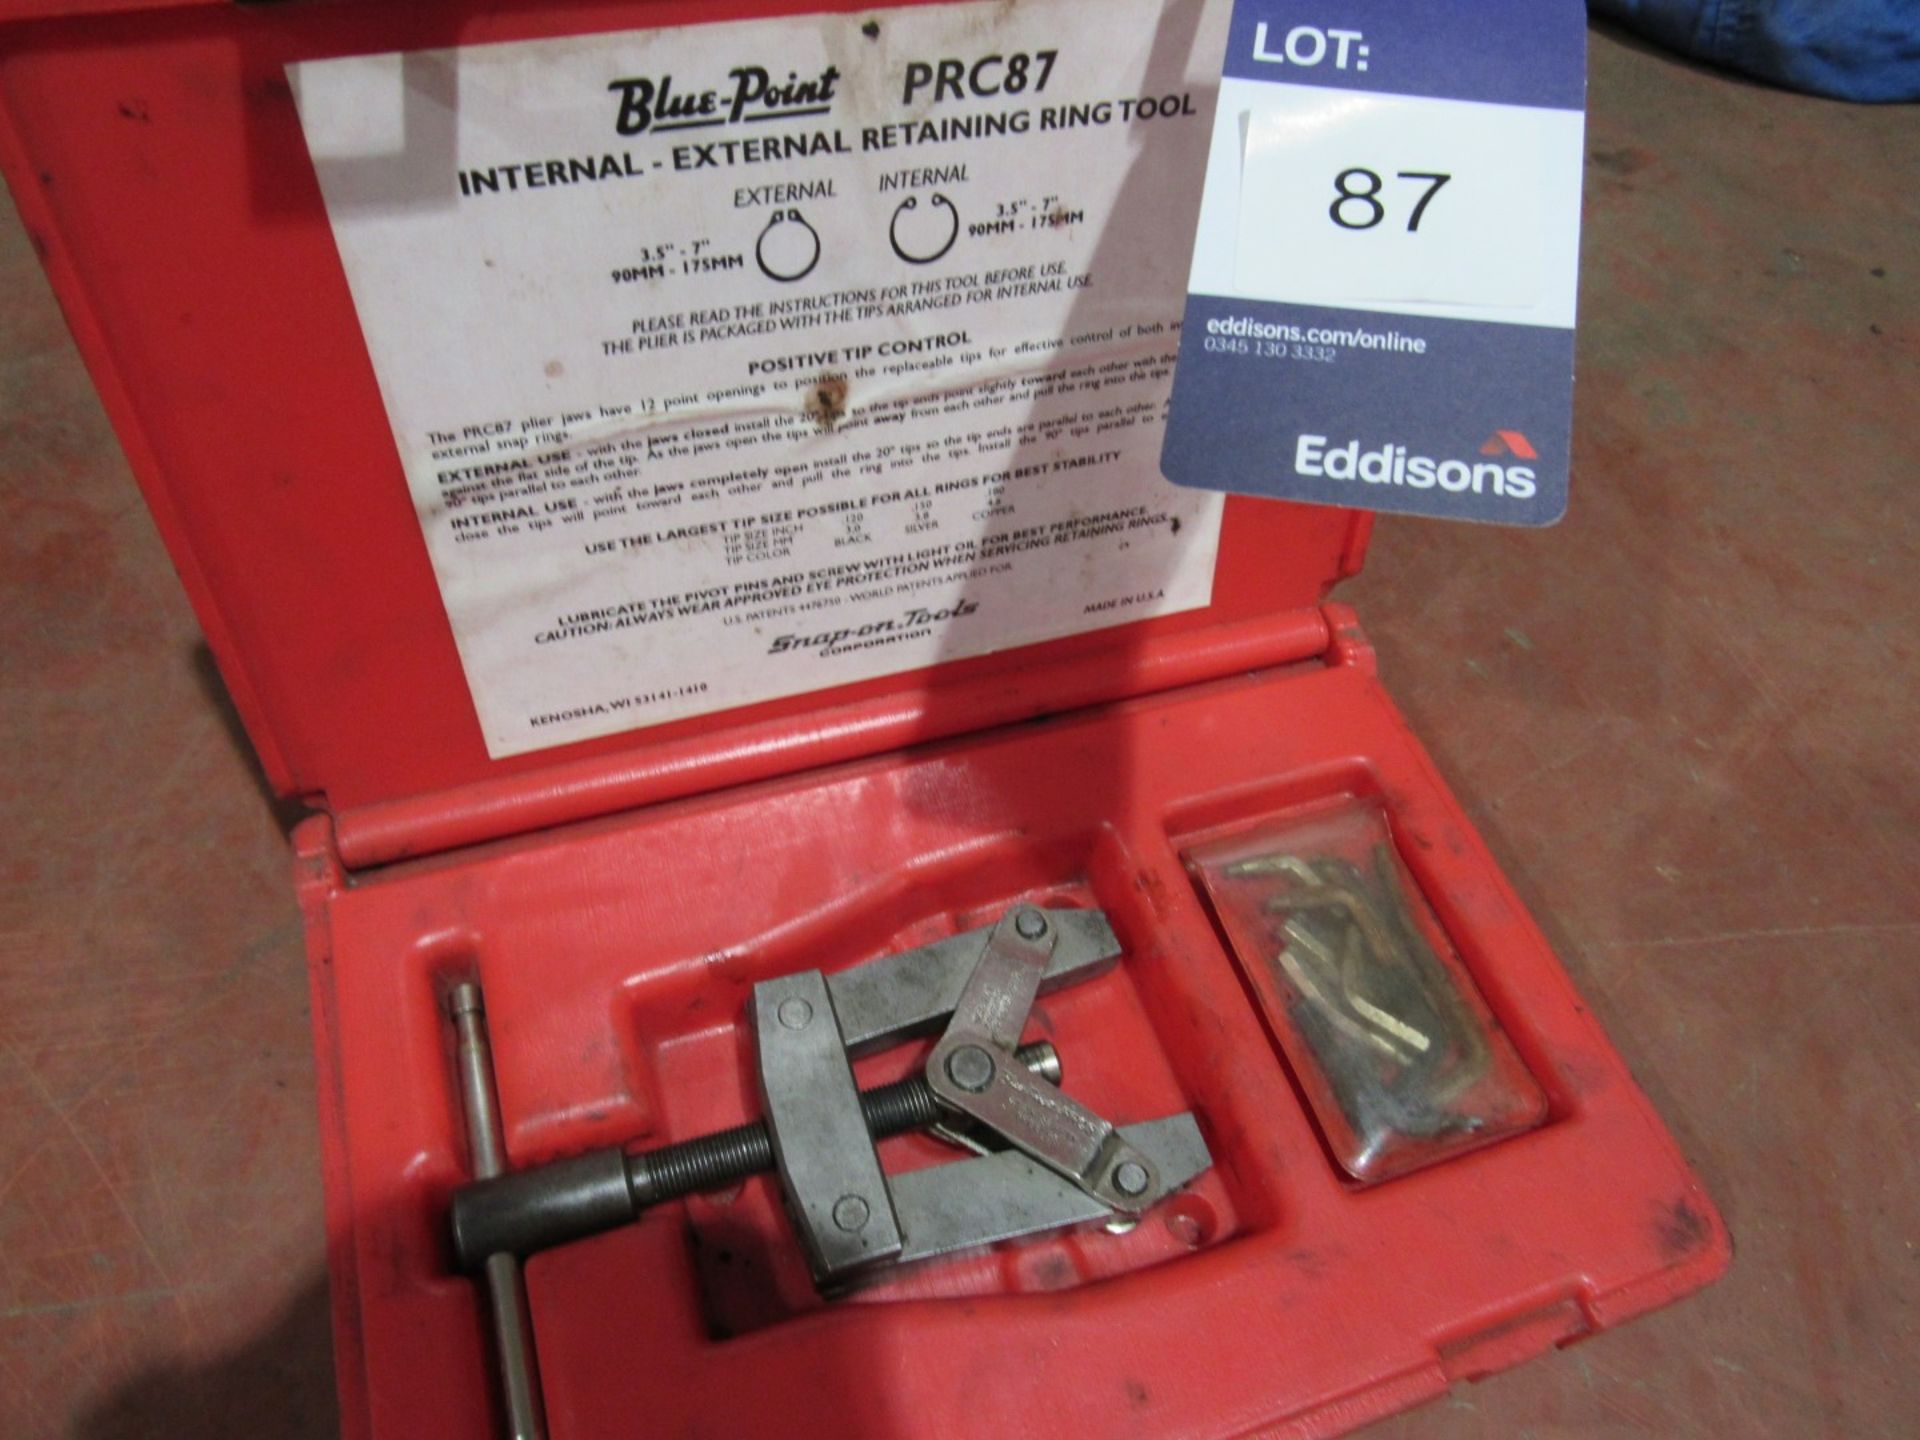 Blue Point PRC87 Internal – External retaining ring tool